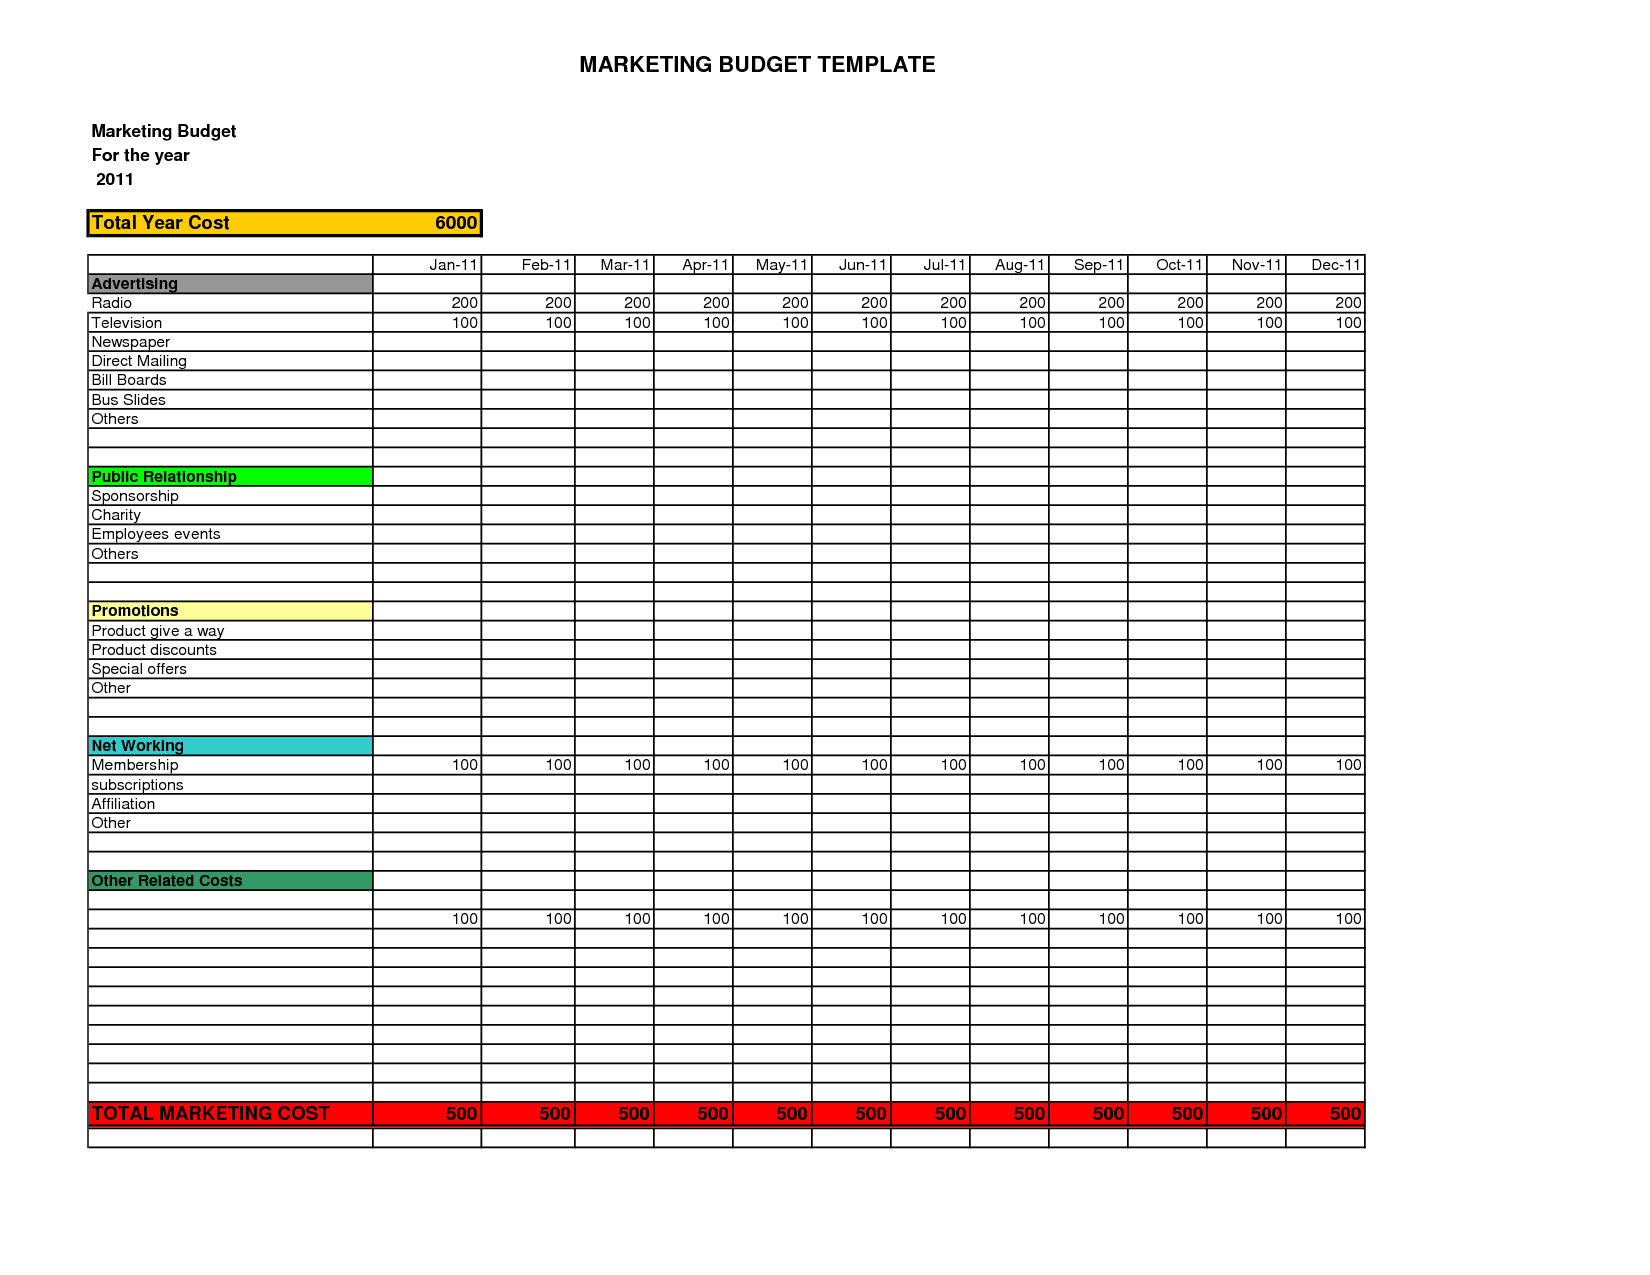 Round Robin Excel Spreadsheet Download Regarding Xl Spreadsheet Download And Marketing Bud Template Excel Sample